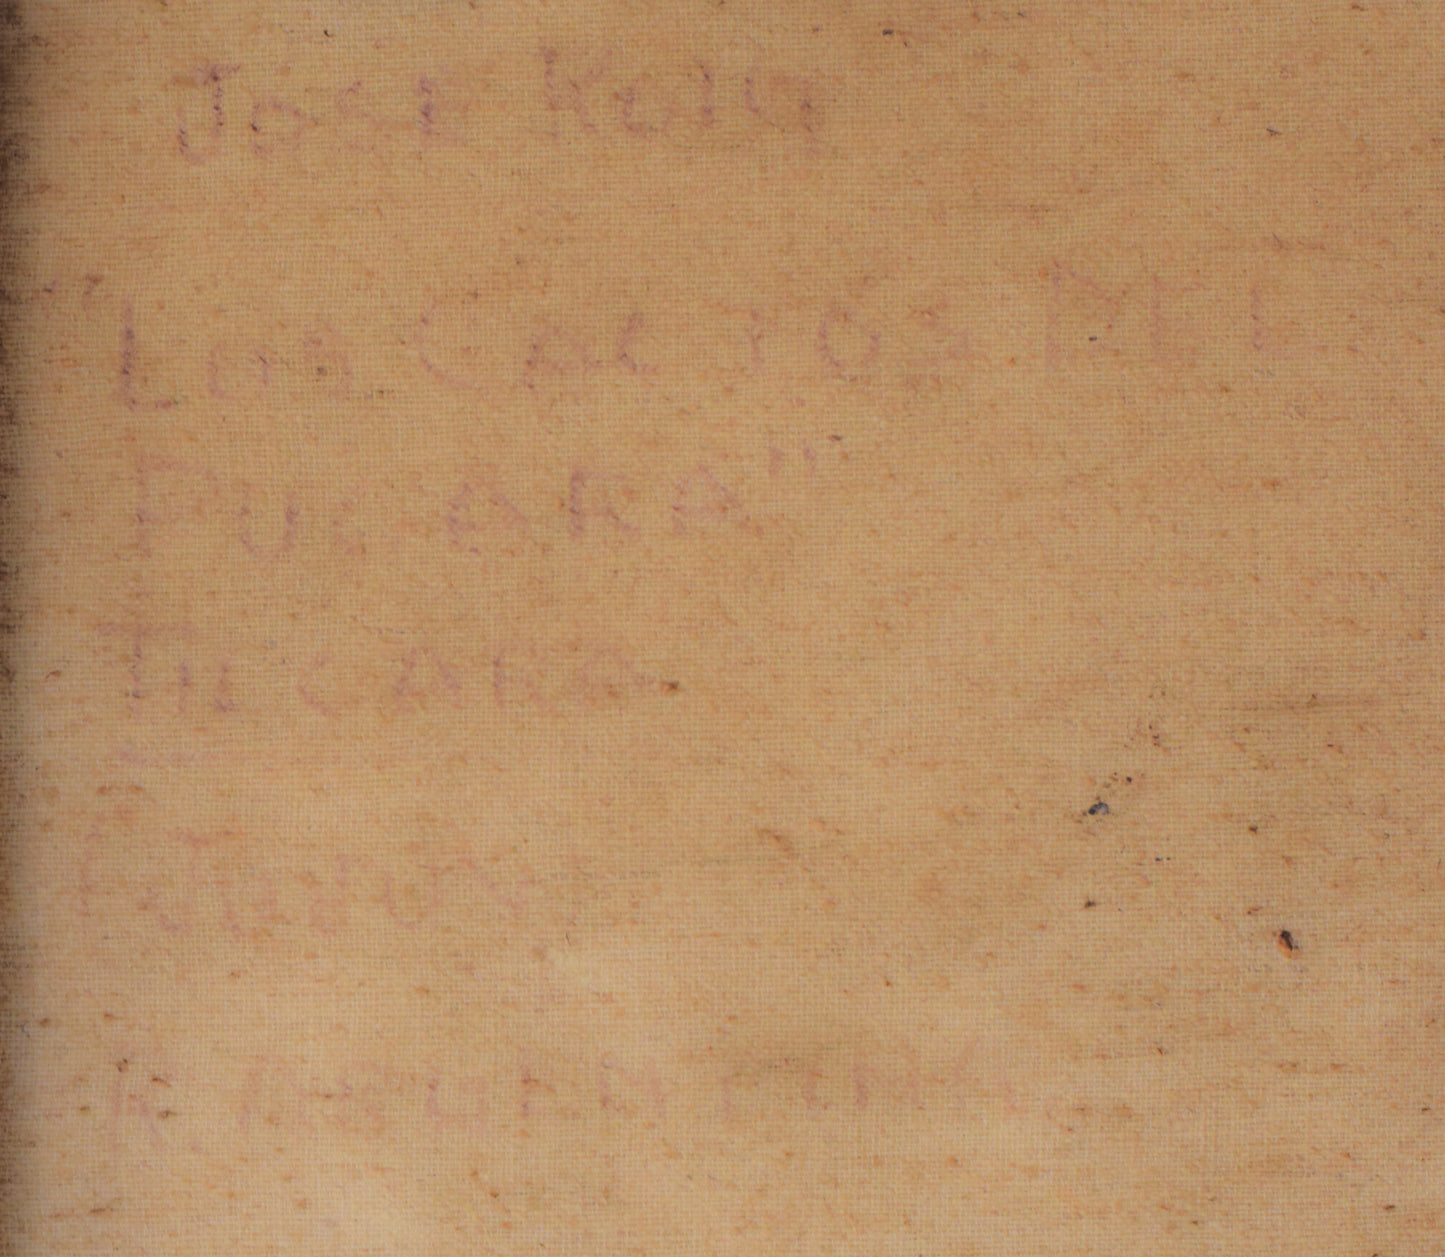 Purcará de Tilcara by José Roig_Inscription